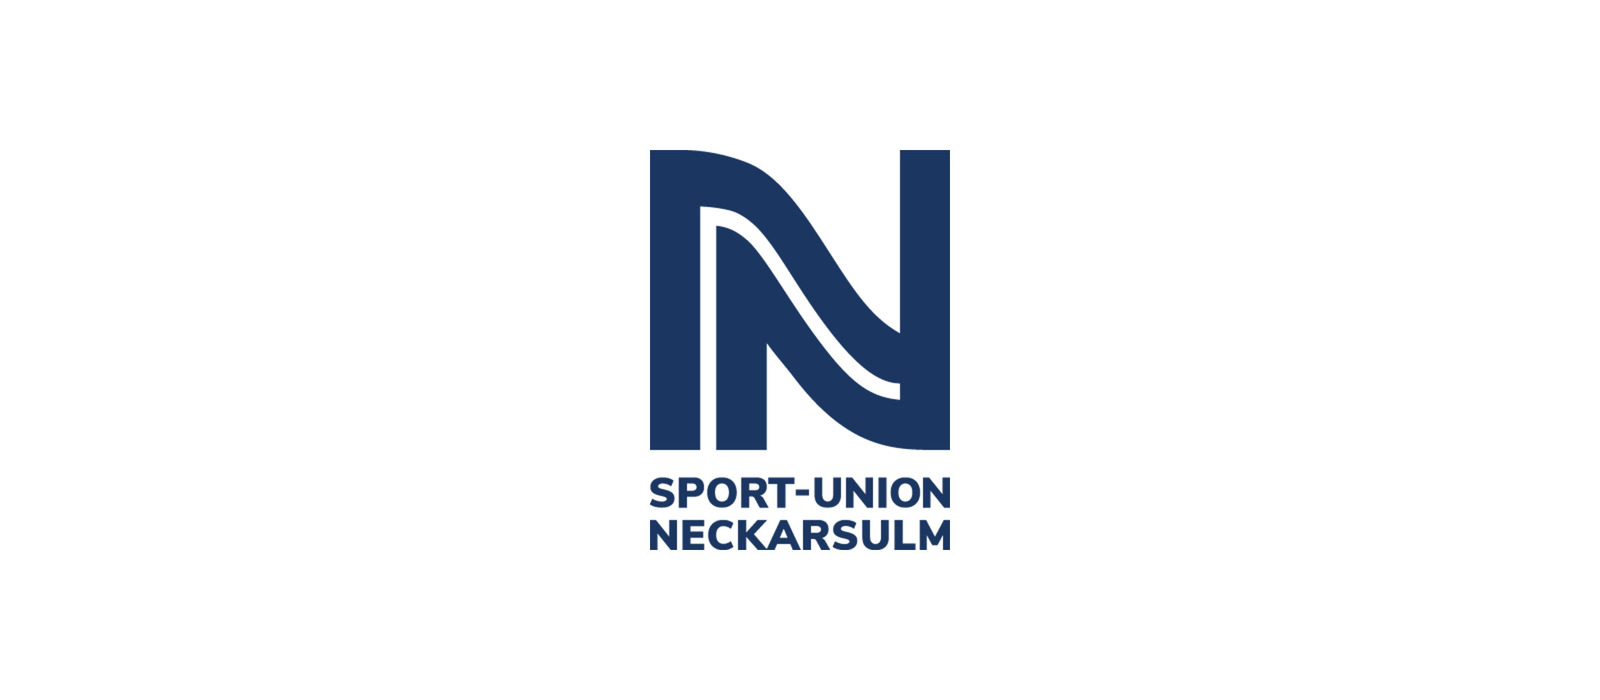 Sport-Union Neckarsulm vs Buxtehuder SV